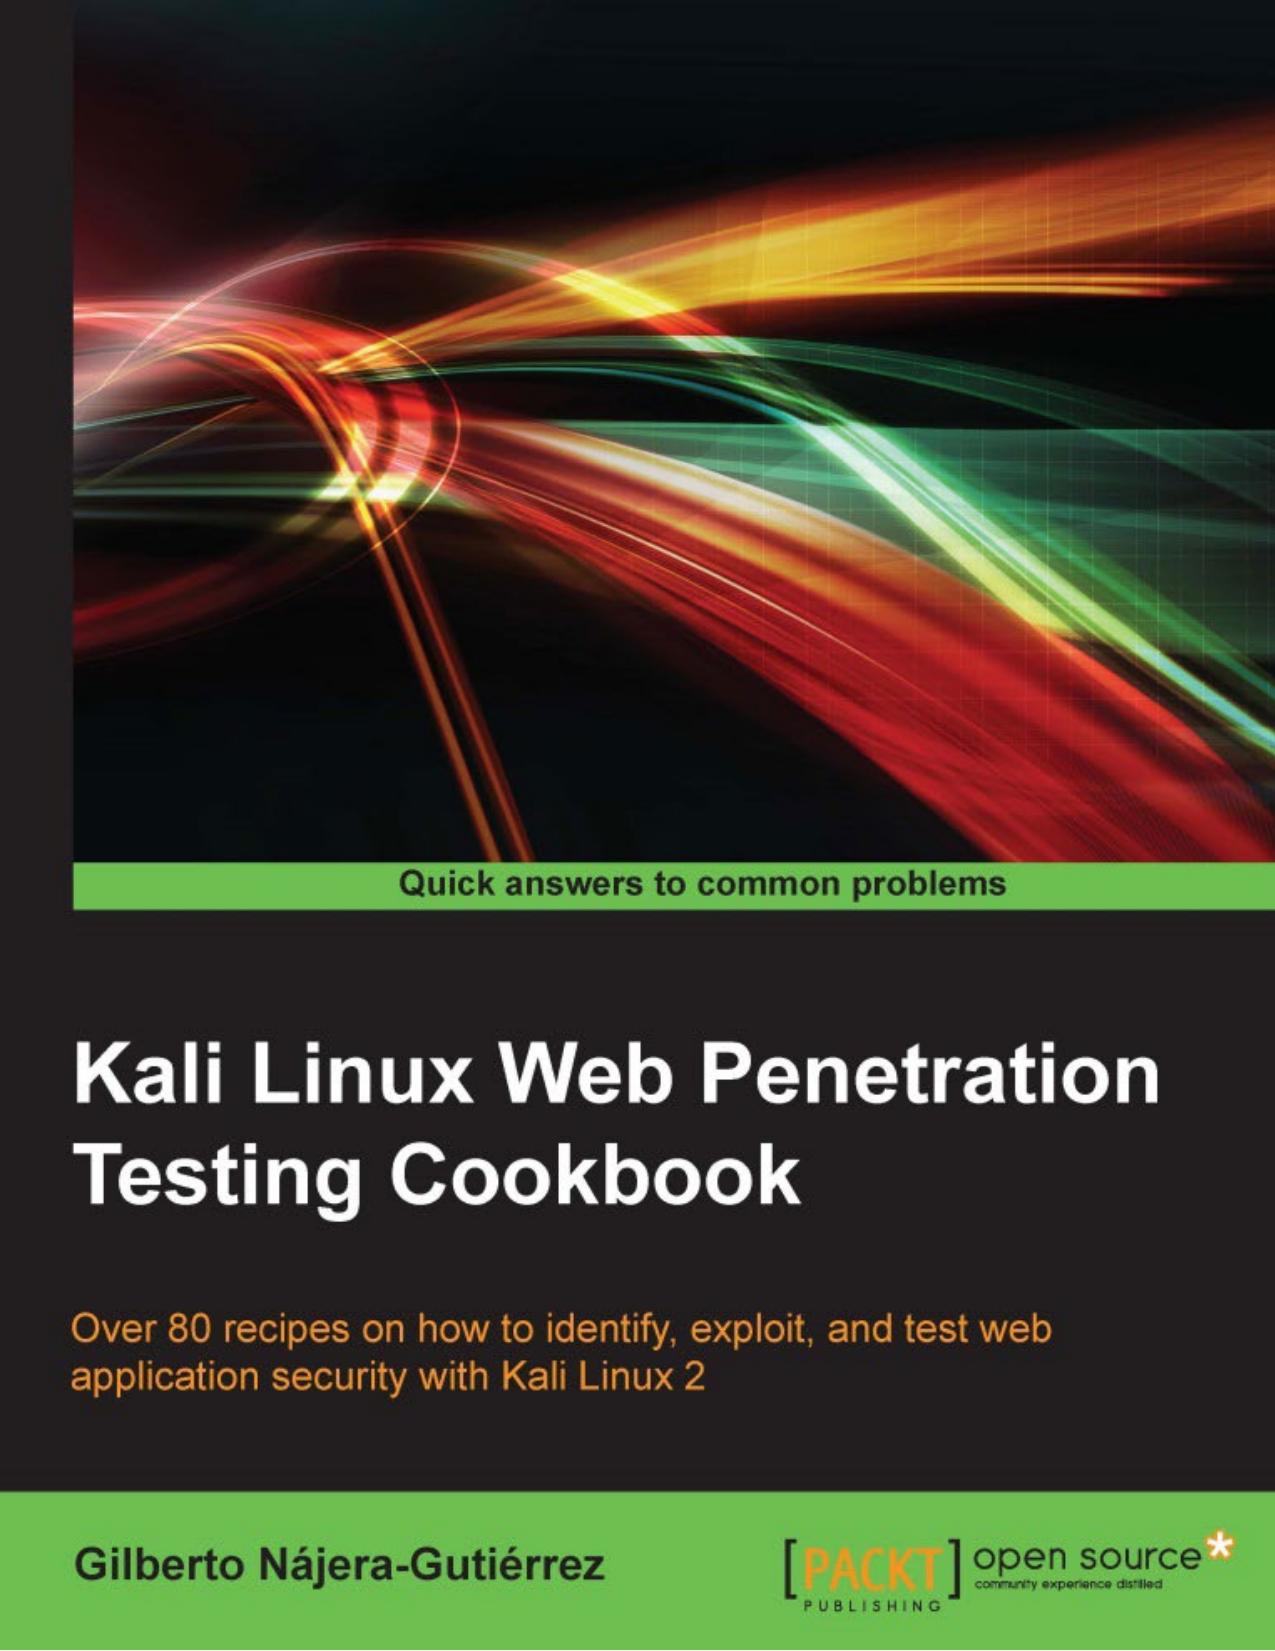 Kali Linux Web Penetration Testing Cookbook by Gilberto Najera-Gutierrez